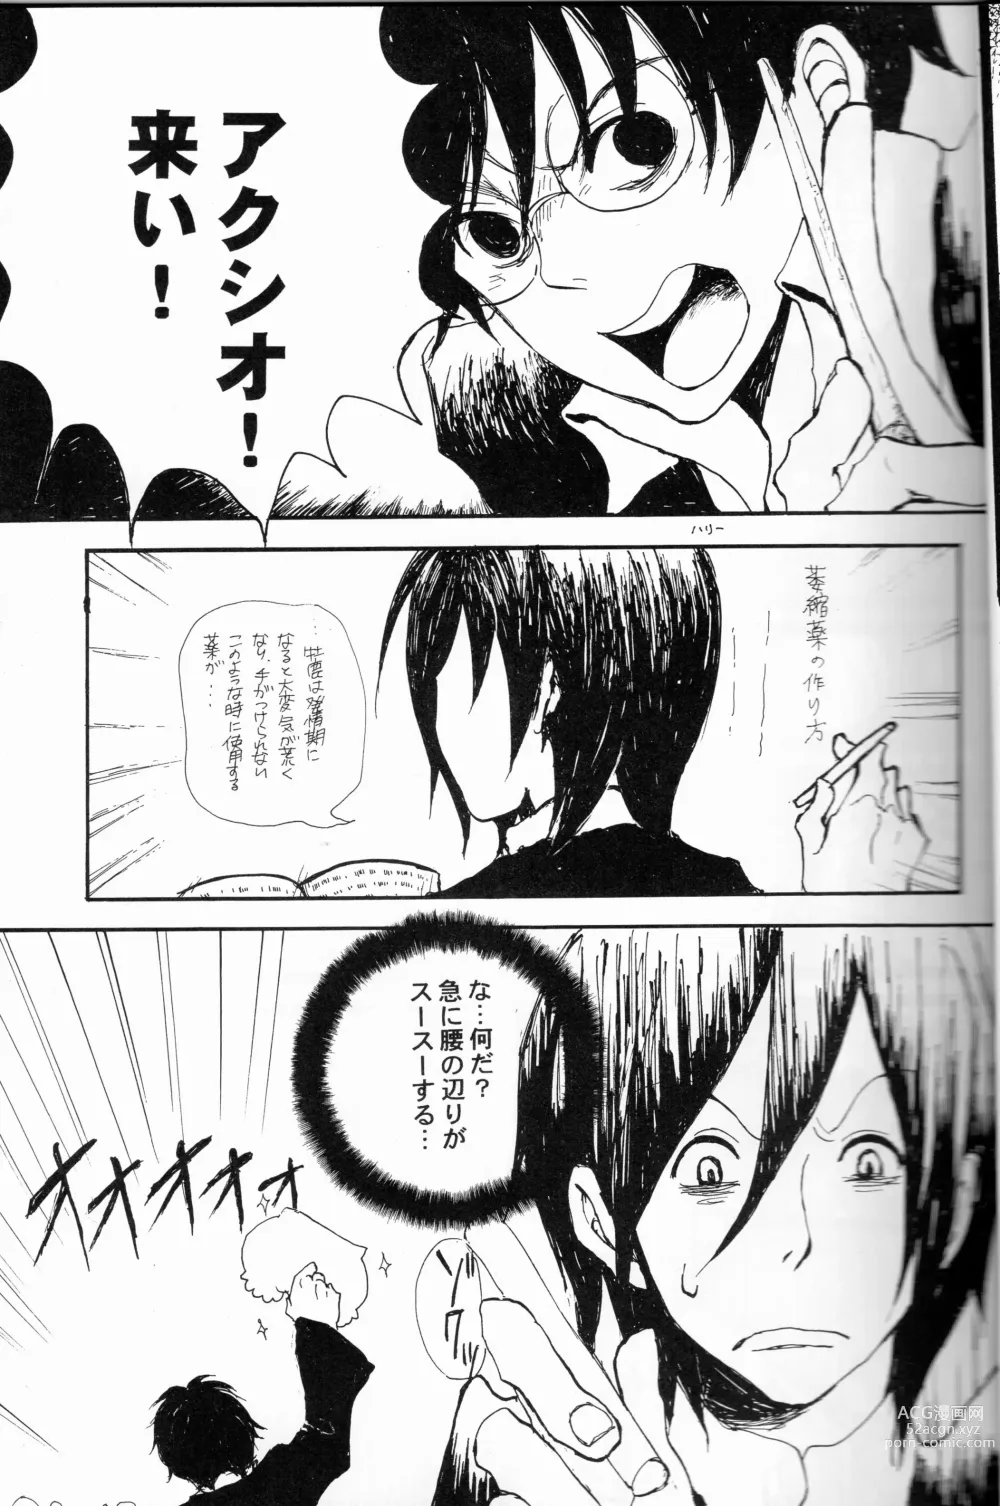 Page 6 of doujinshi 44